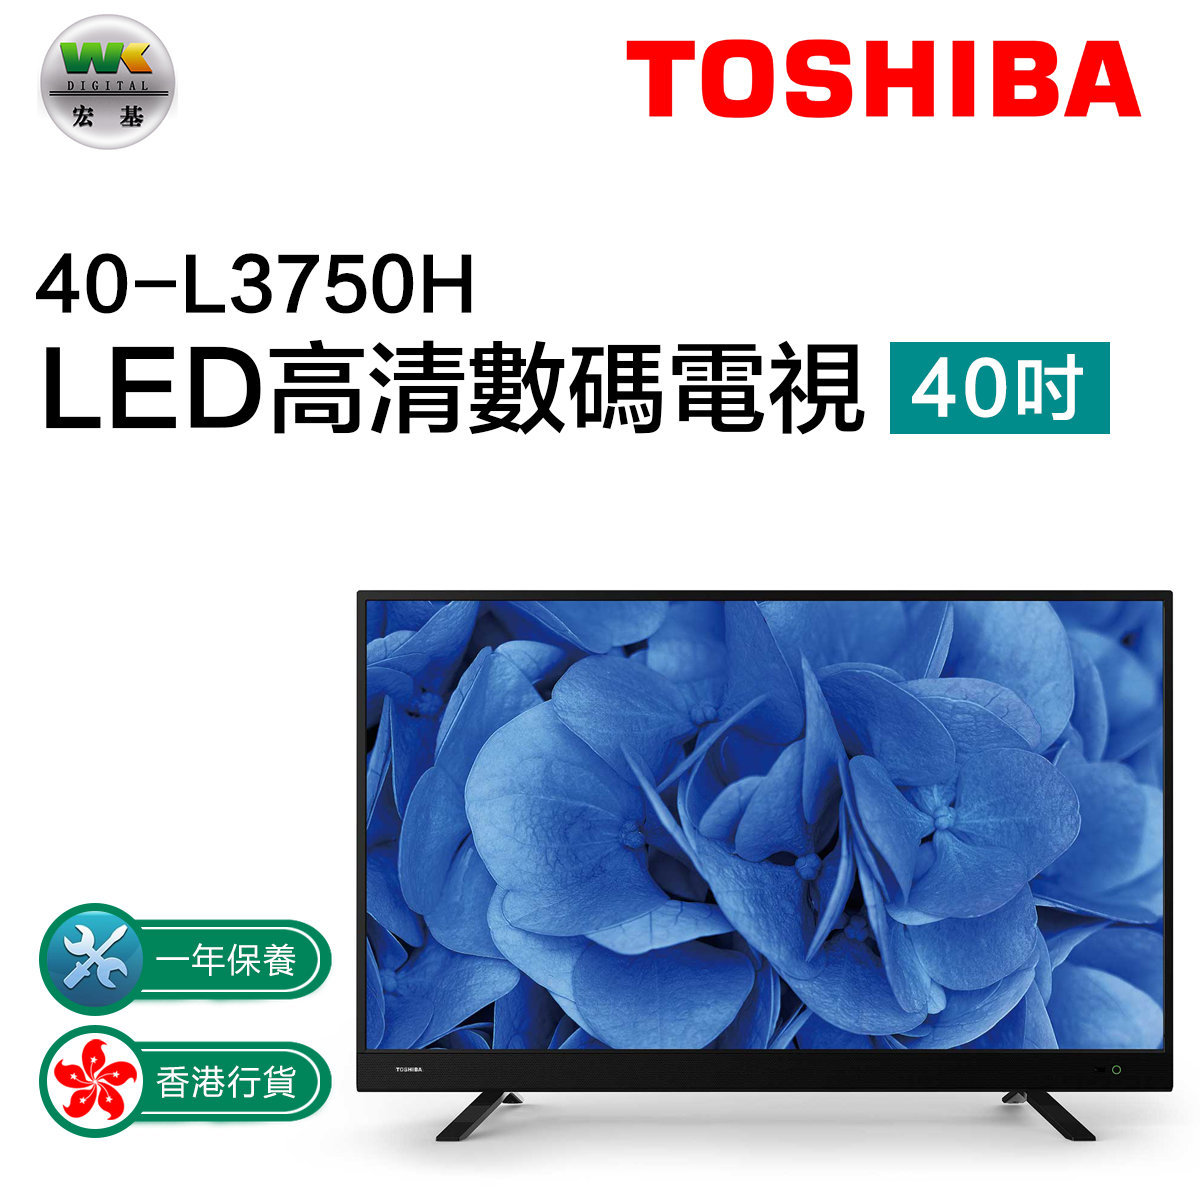 40-L3750H HD Digital TV 40" (Hong Kong licensed)